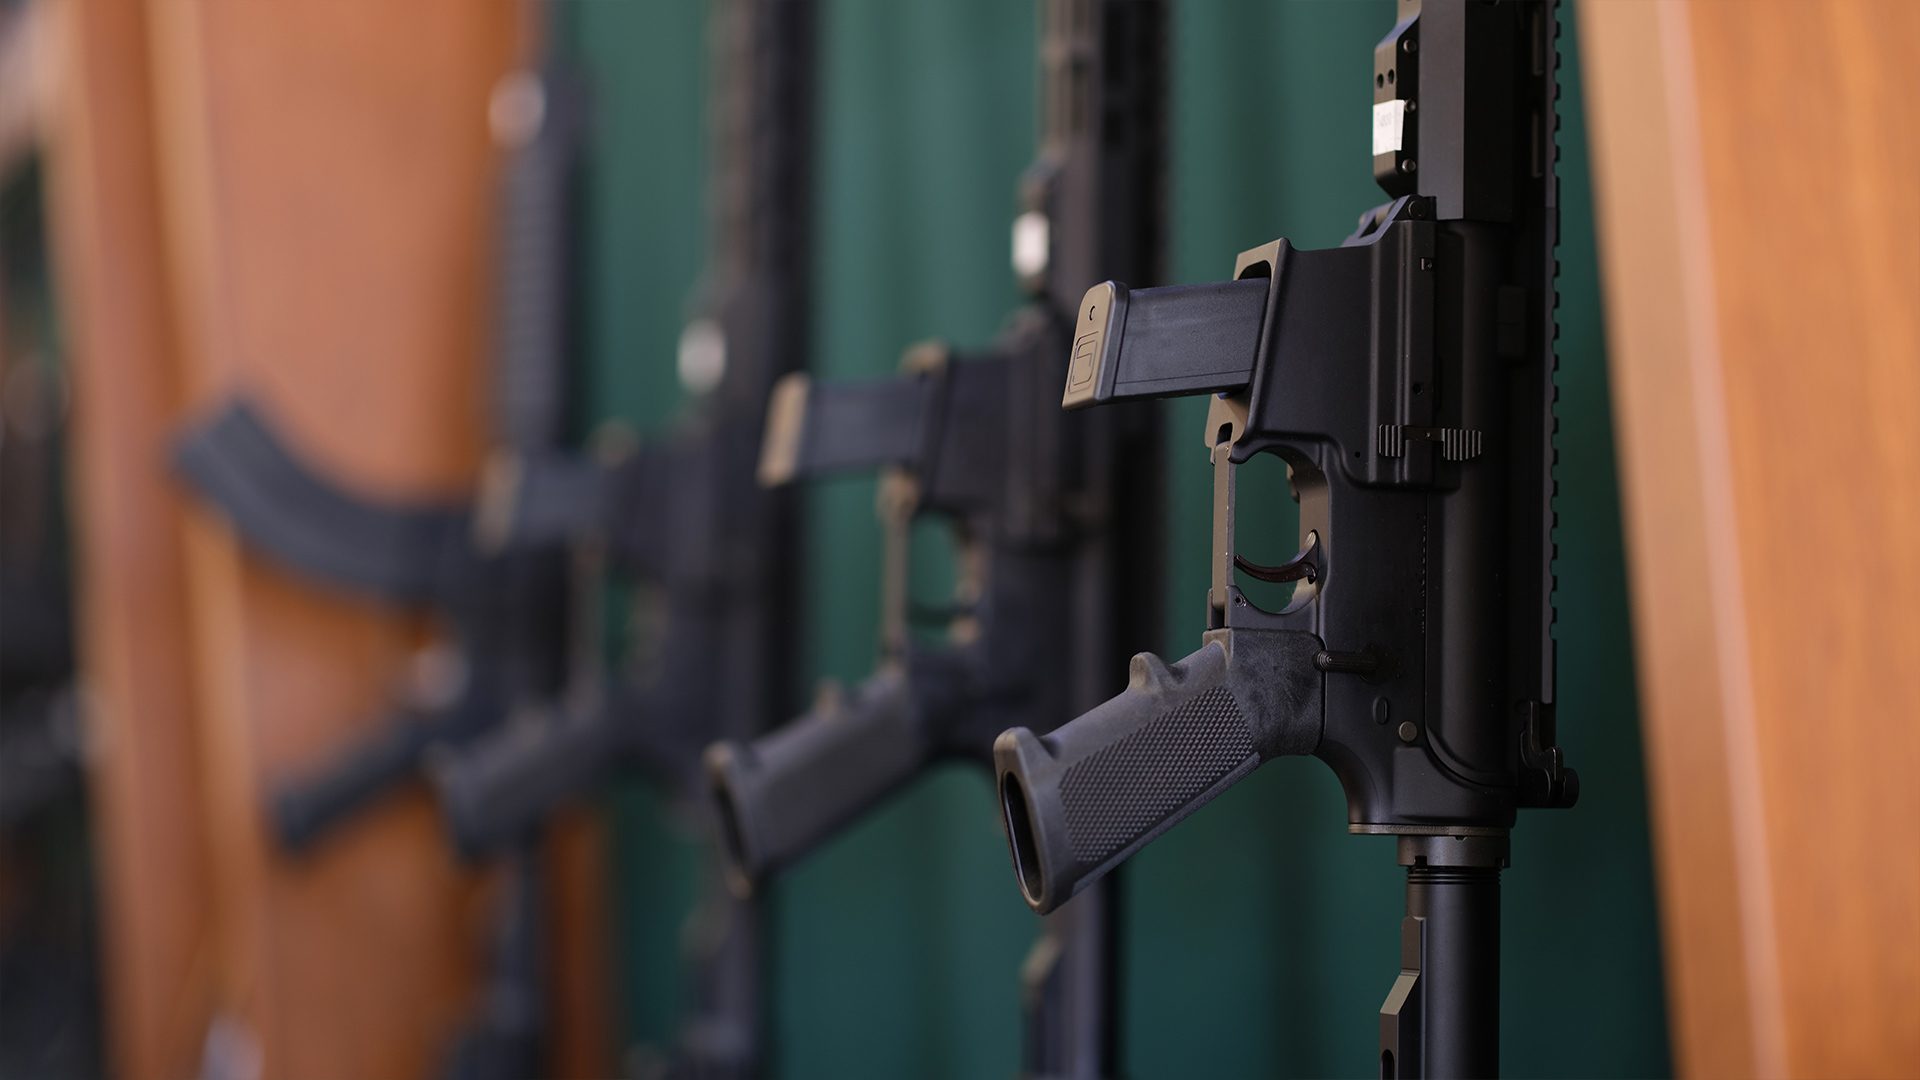 Isn’t it dangerous to allow civilians to own semi-automatic rifles?